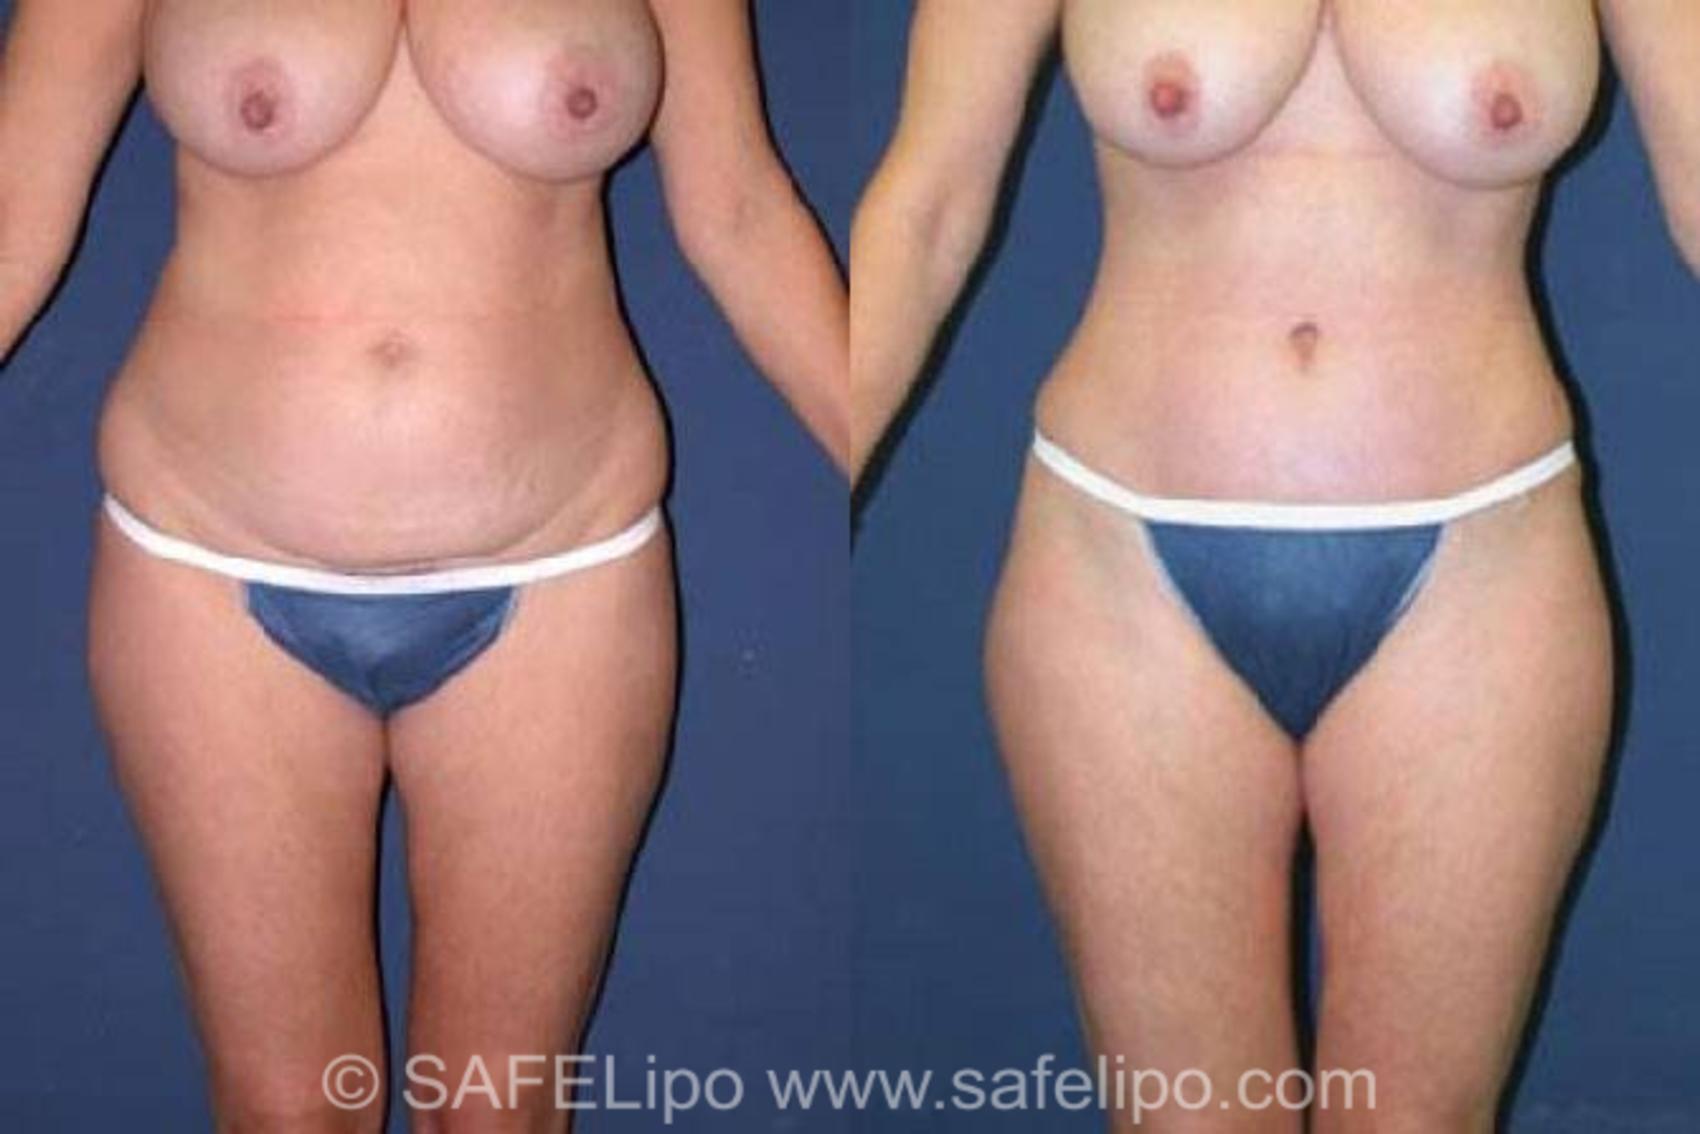 SAFELipoHD® Case 75 Before & After View #1 | SAFELipo®